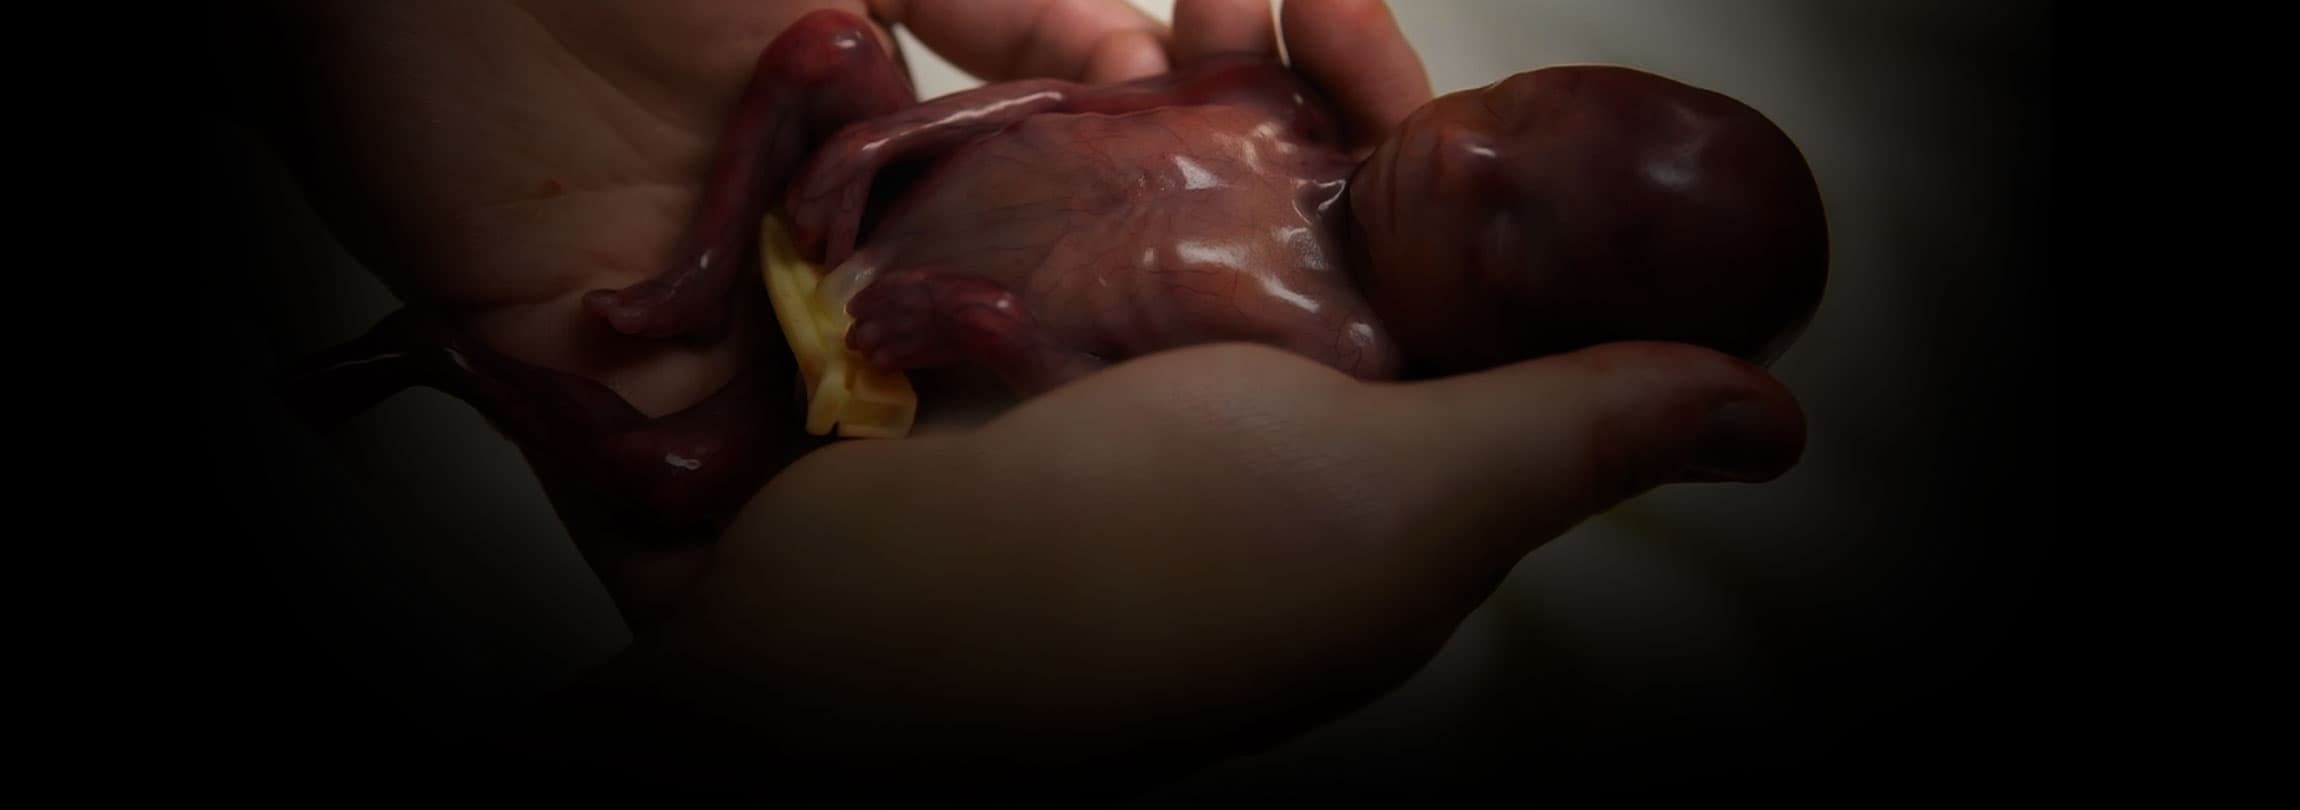 O bebê que está mudando o debate sobre o aborto